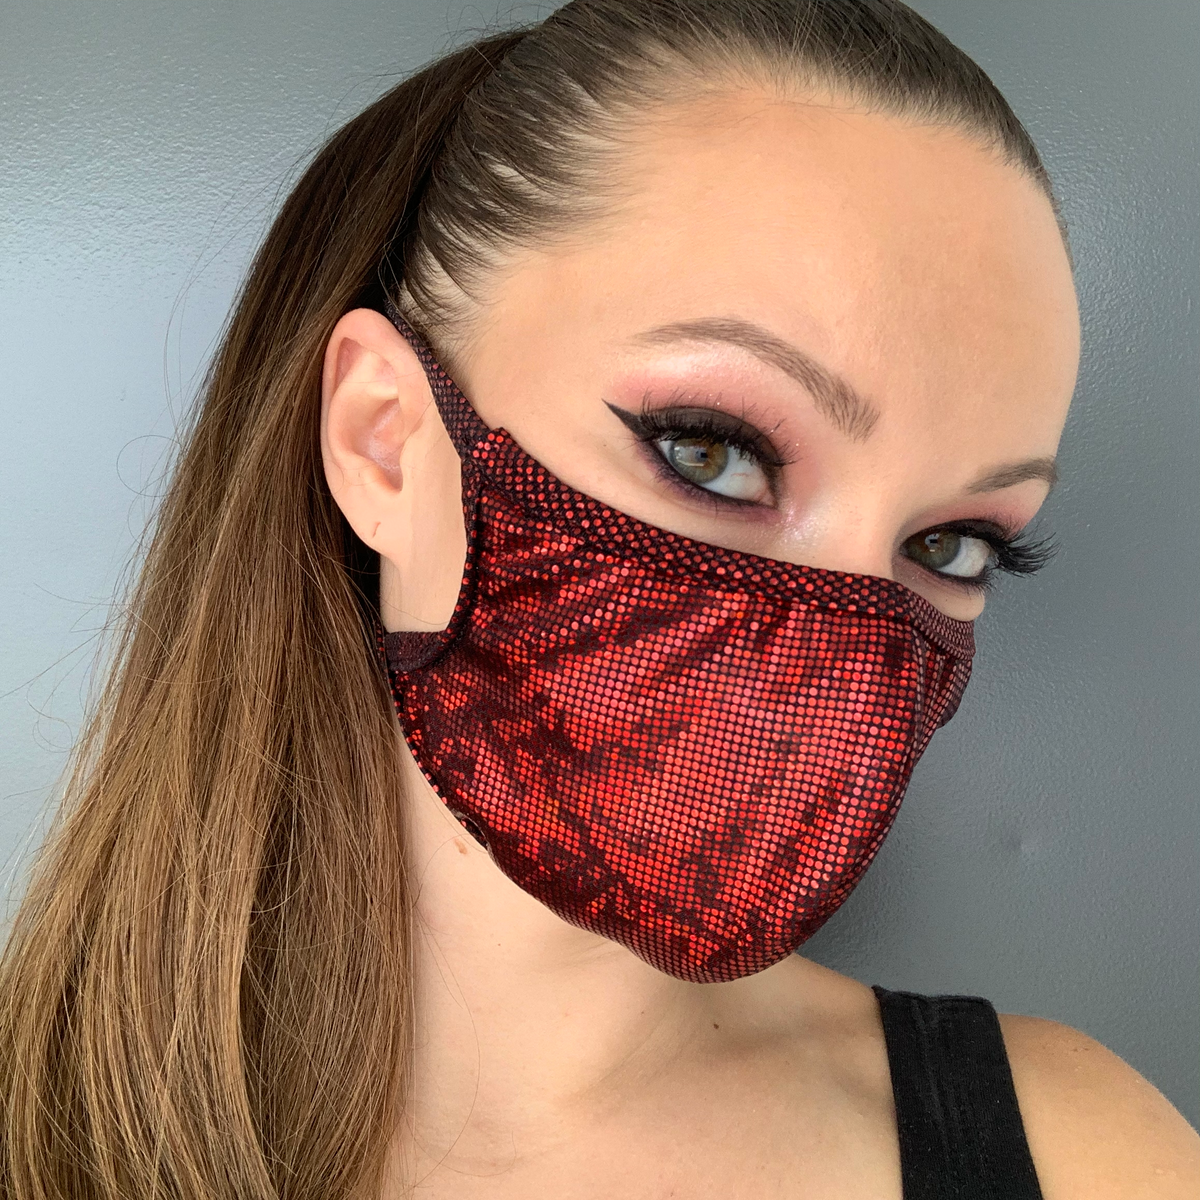 Multi Layered Face Mask - Shimmer